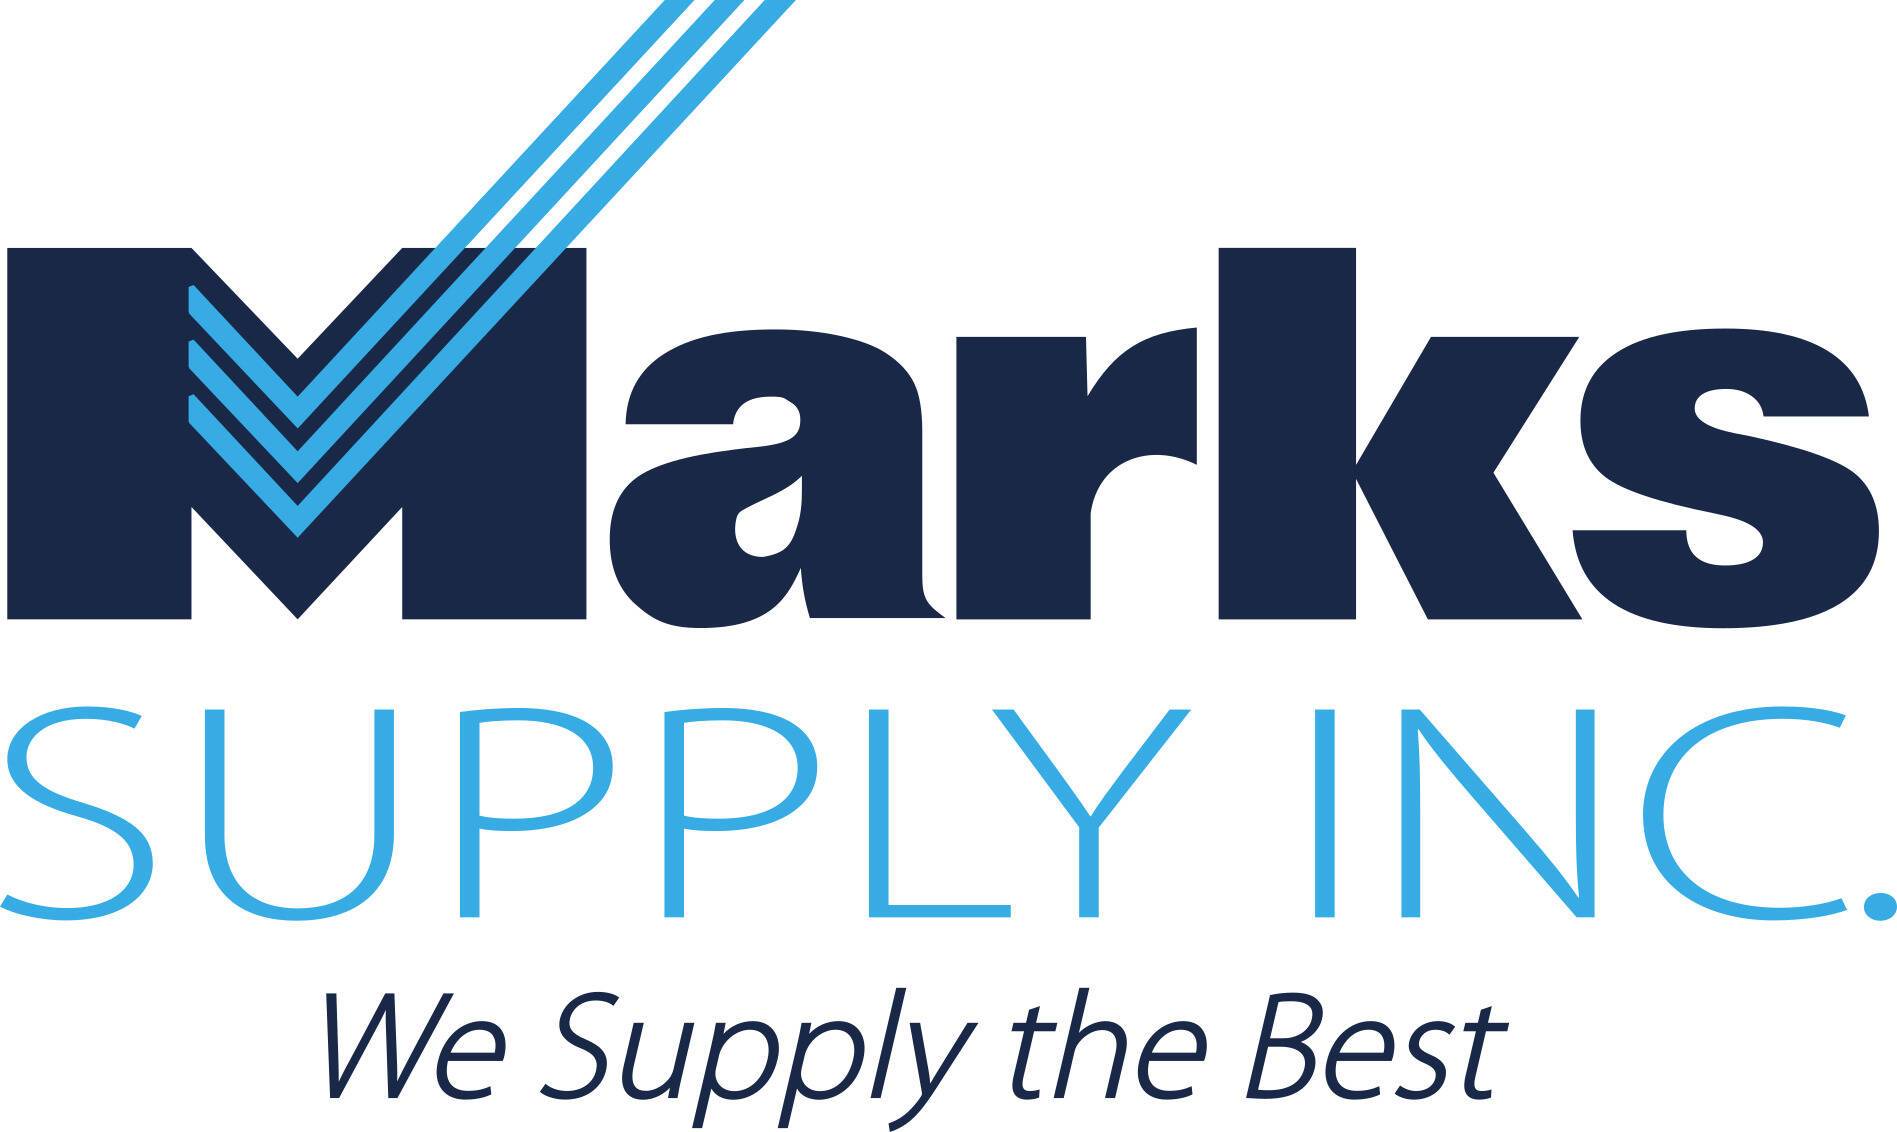 Marks Supply Inc. 